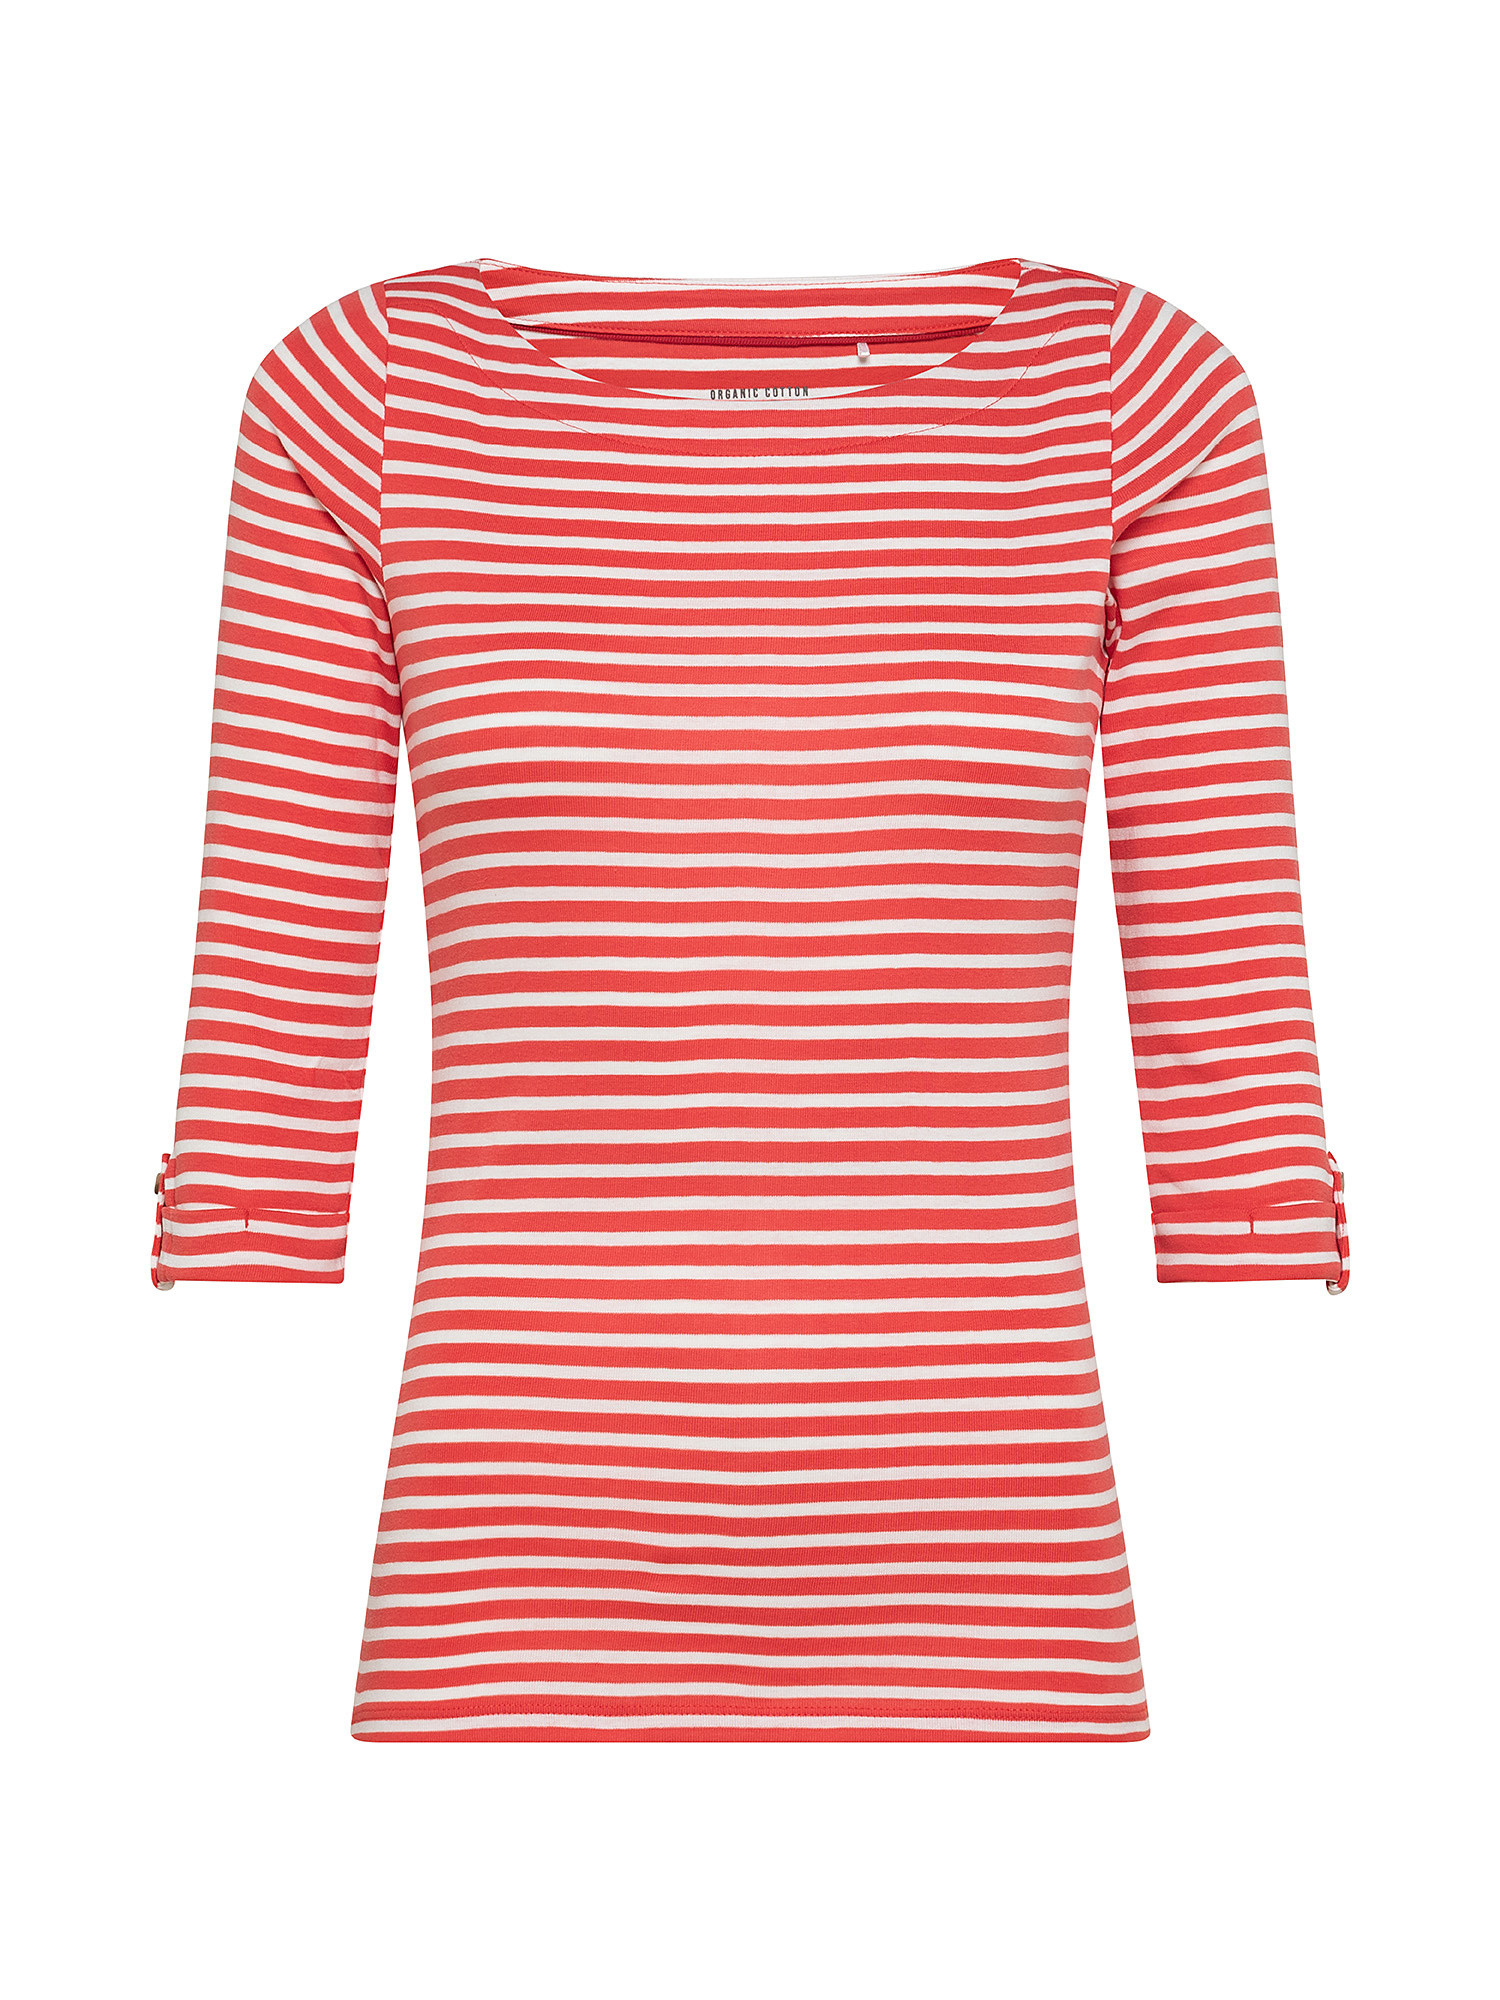 Striped T-shirt, Orange, large image number 0